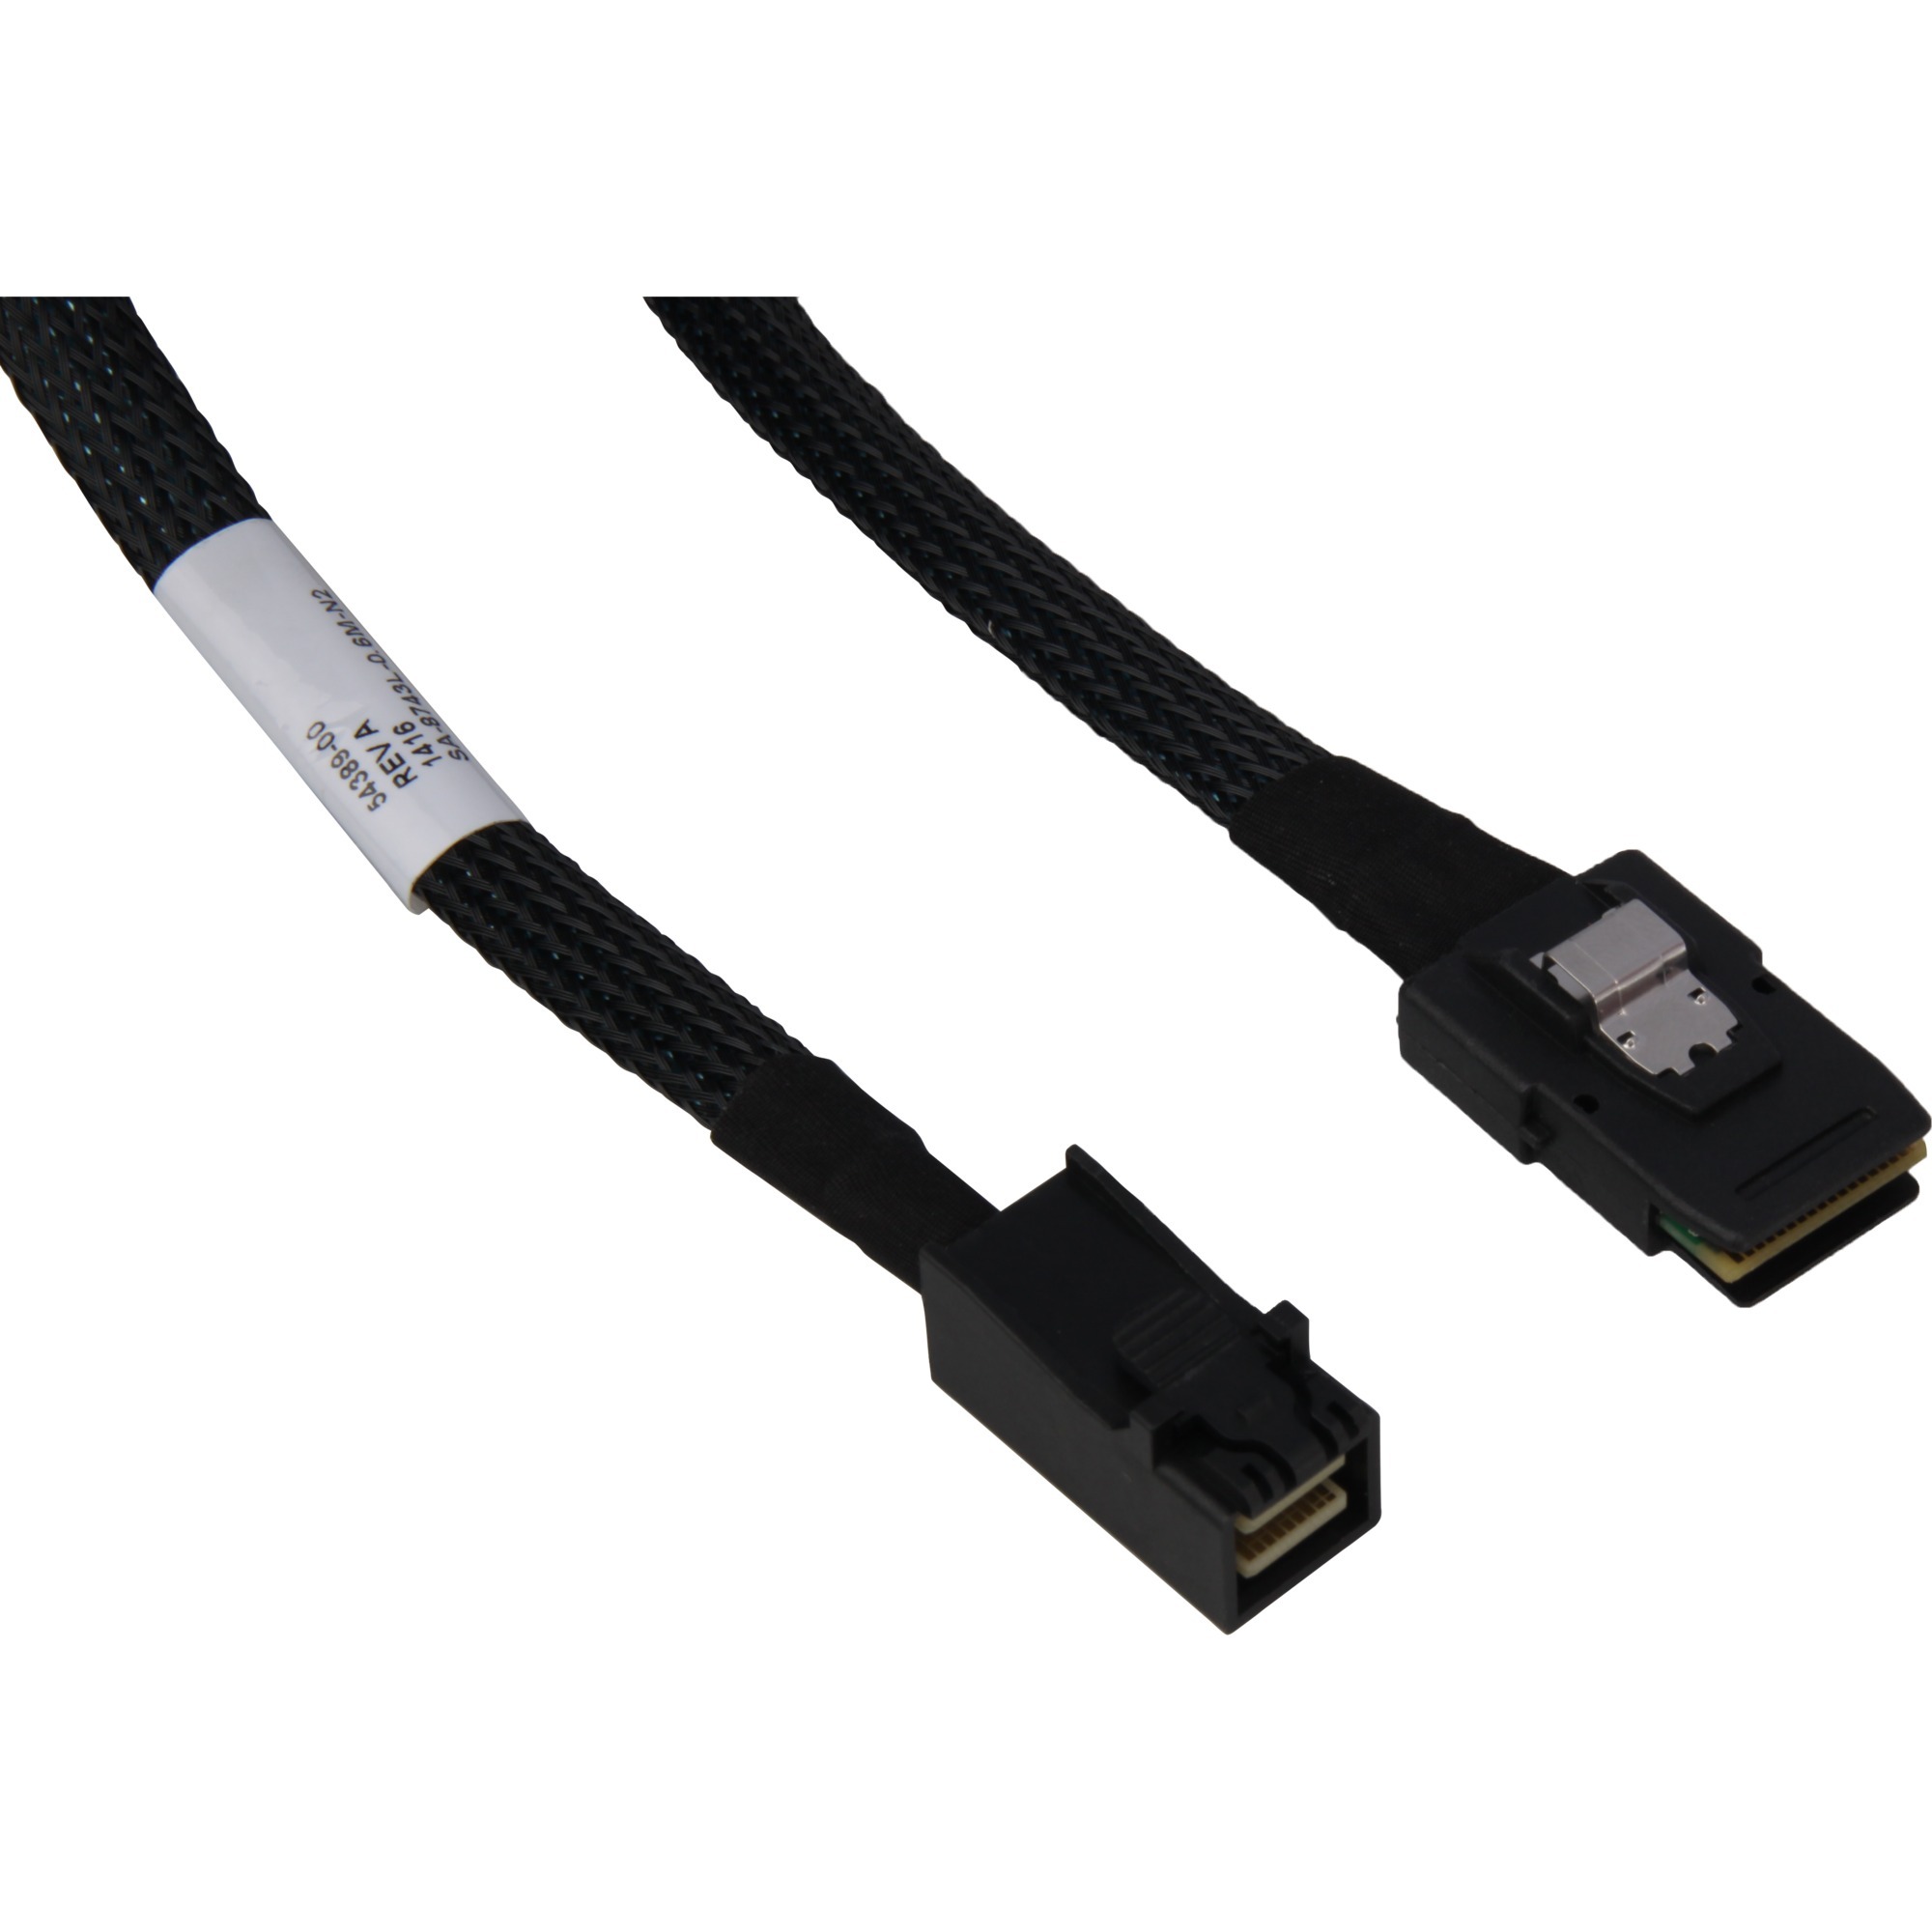 Image of Alternate - Adapterkabel mini SAS HD > mini SAS online einkaufen bei Alternate